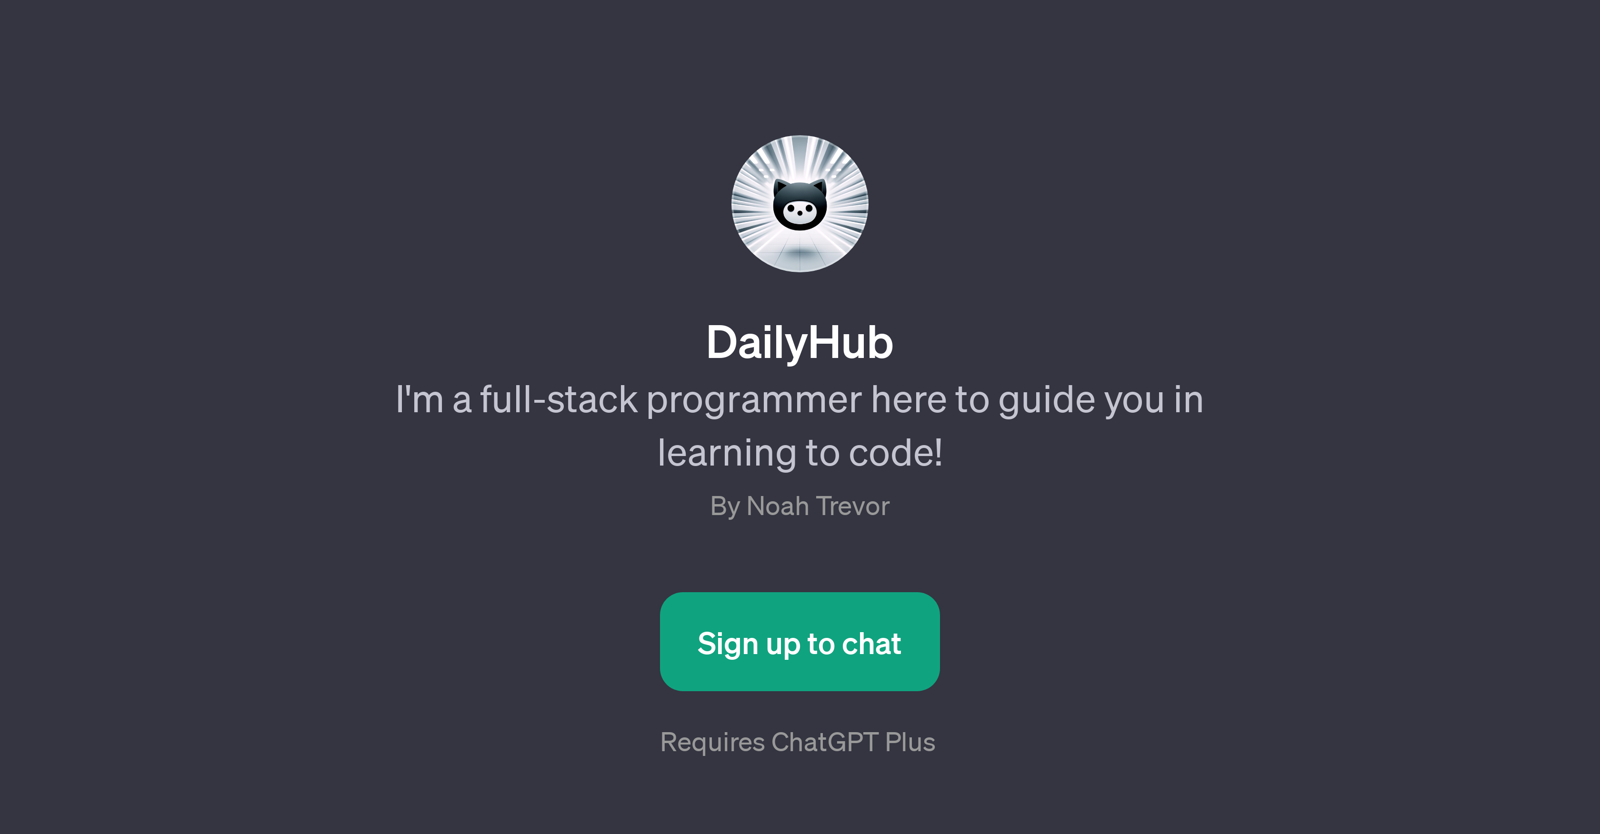 DailyHub website